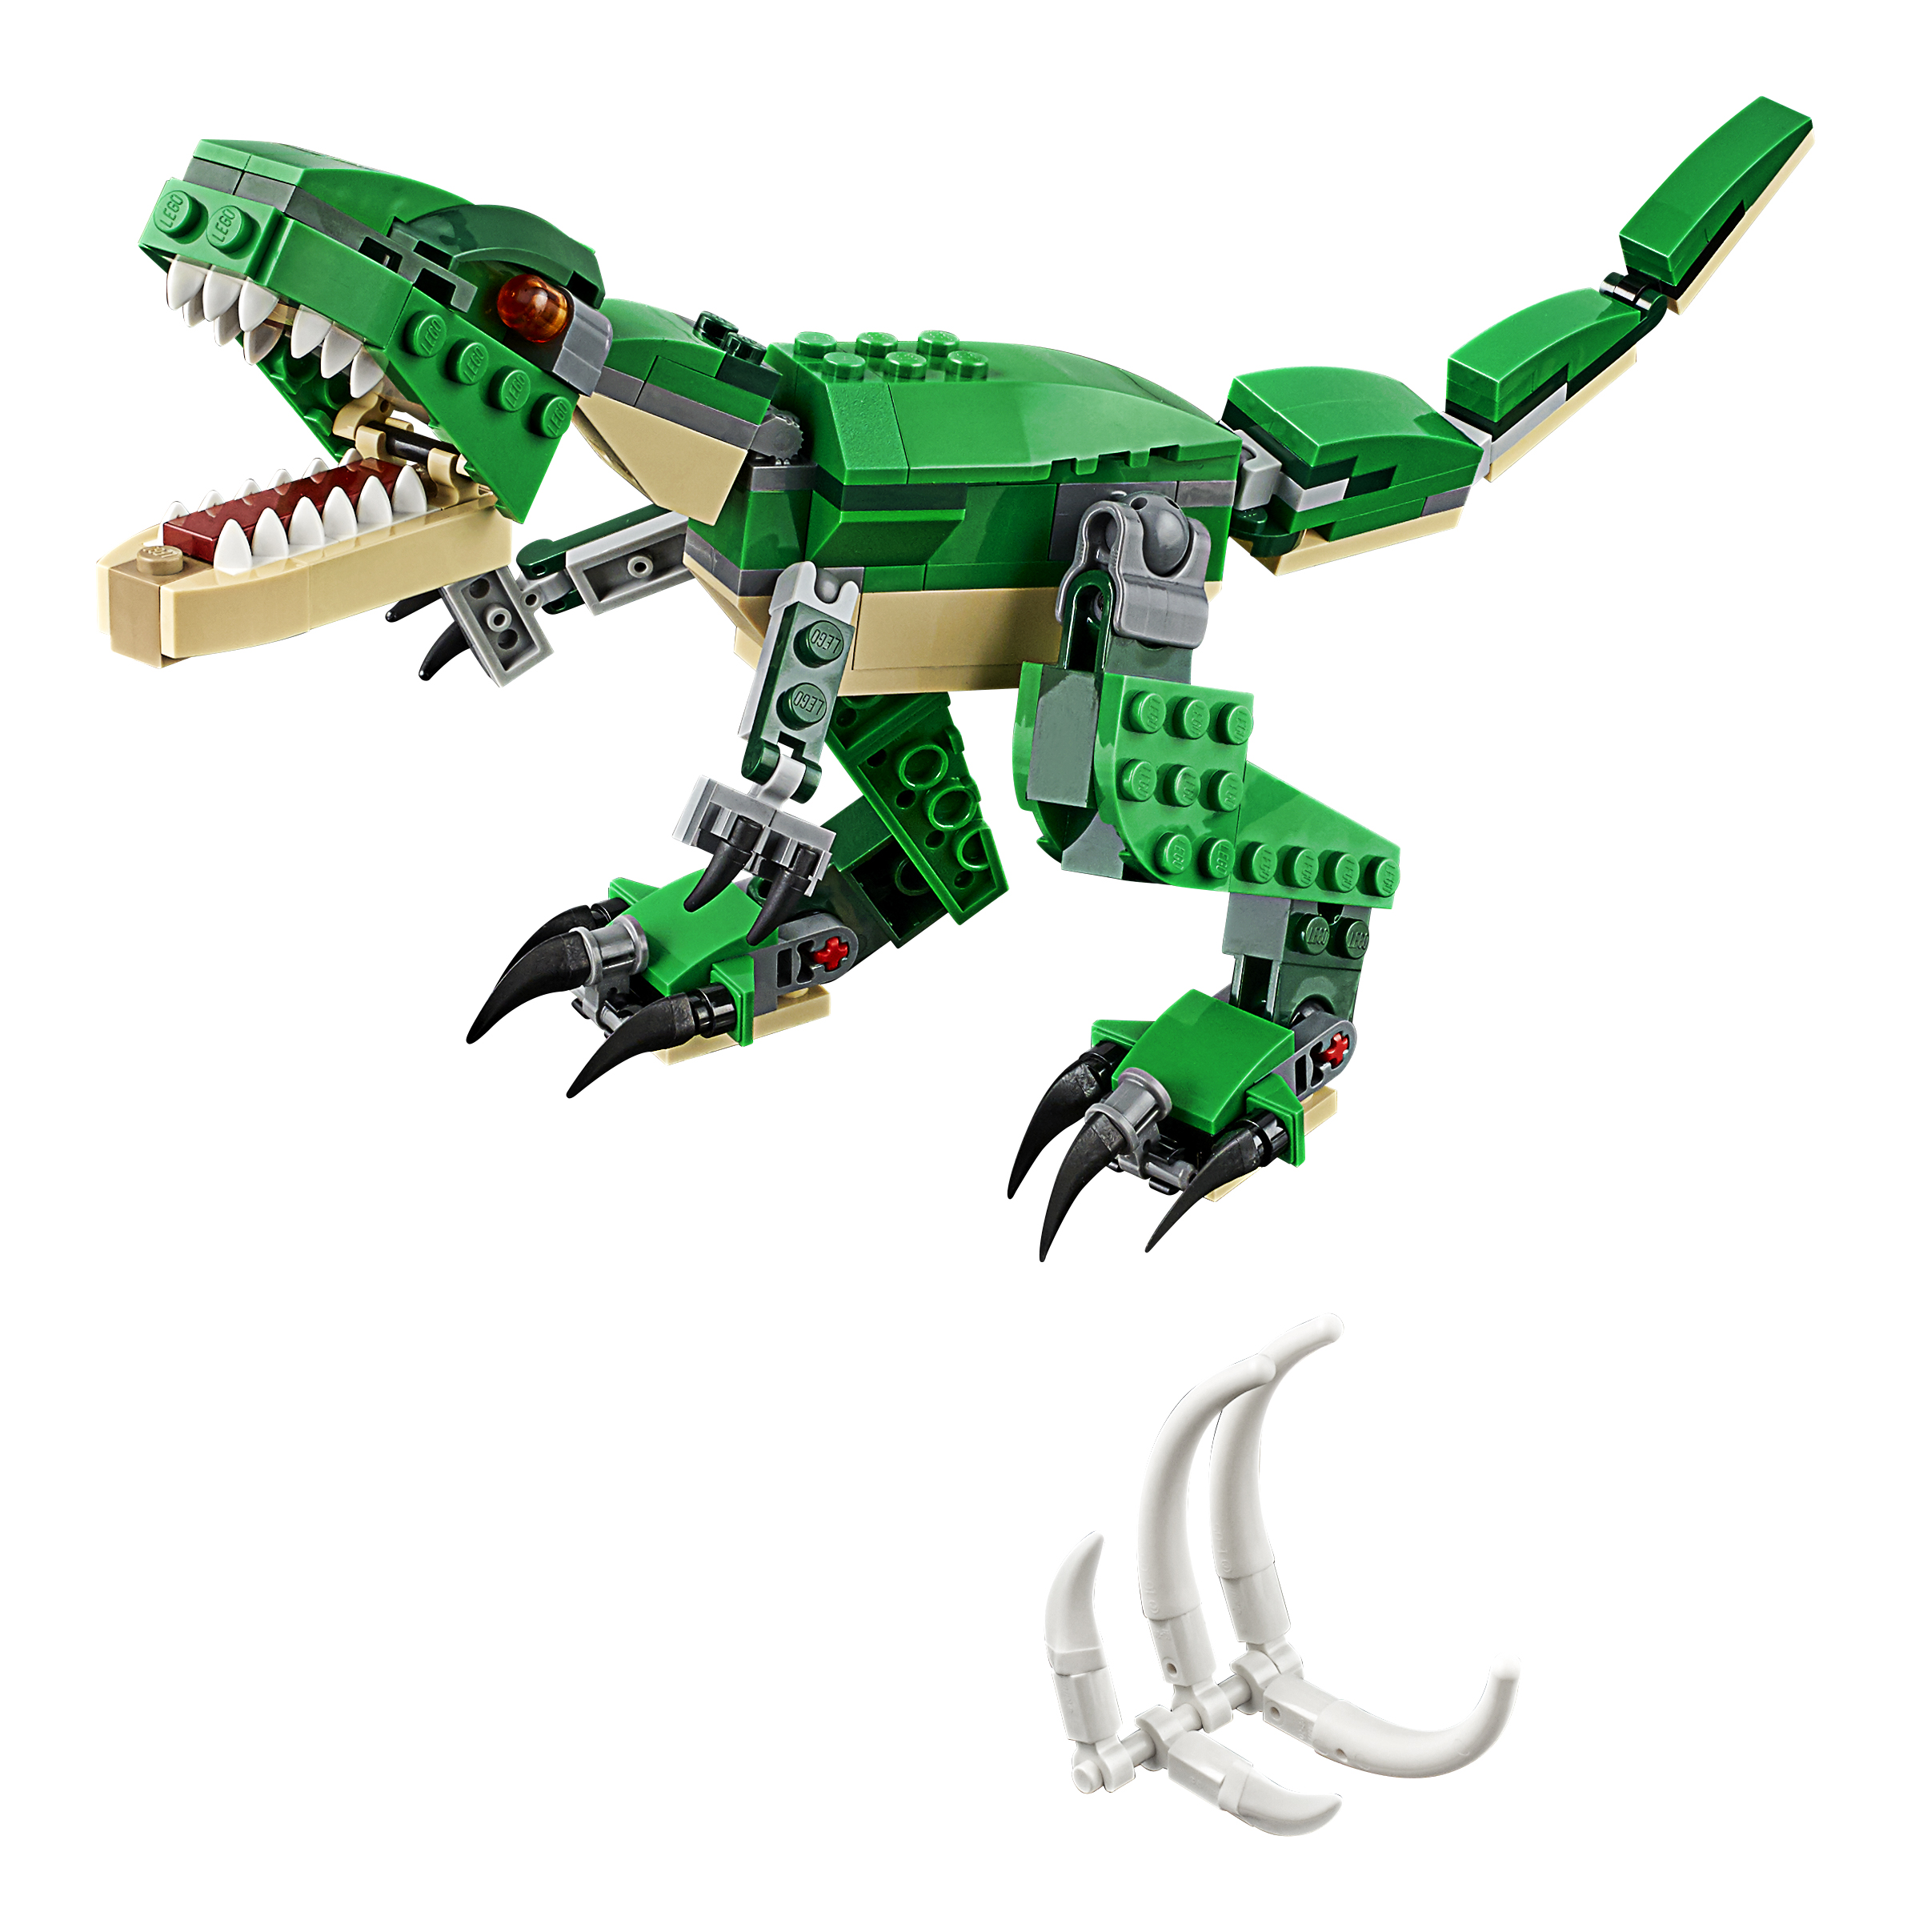 (31058) LEGO Dinosaurier Bausatz, Mehrfarbig